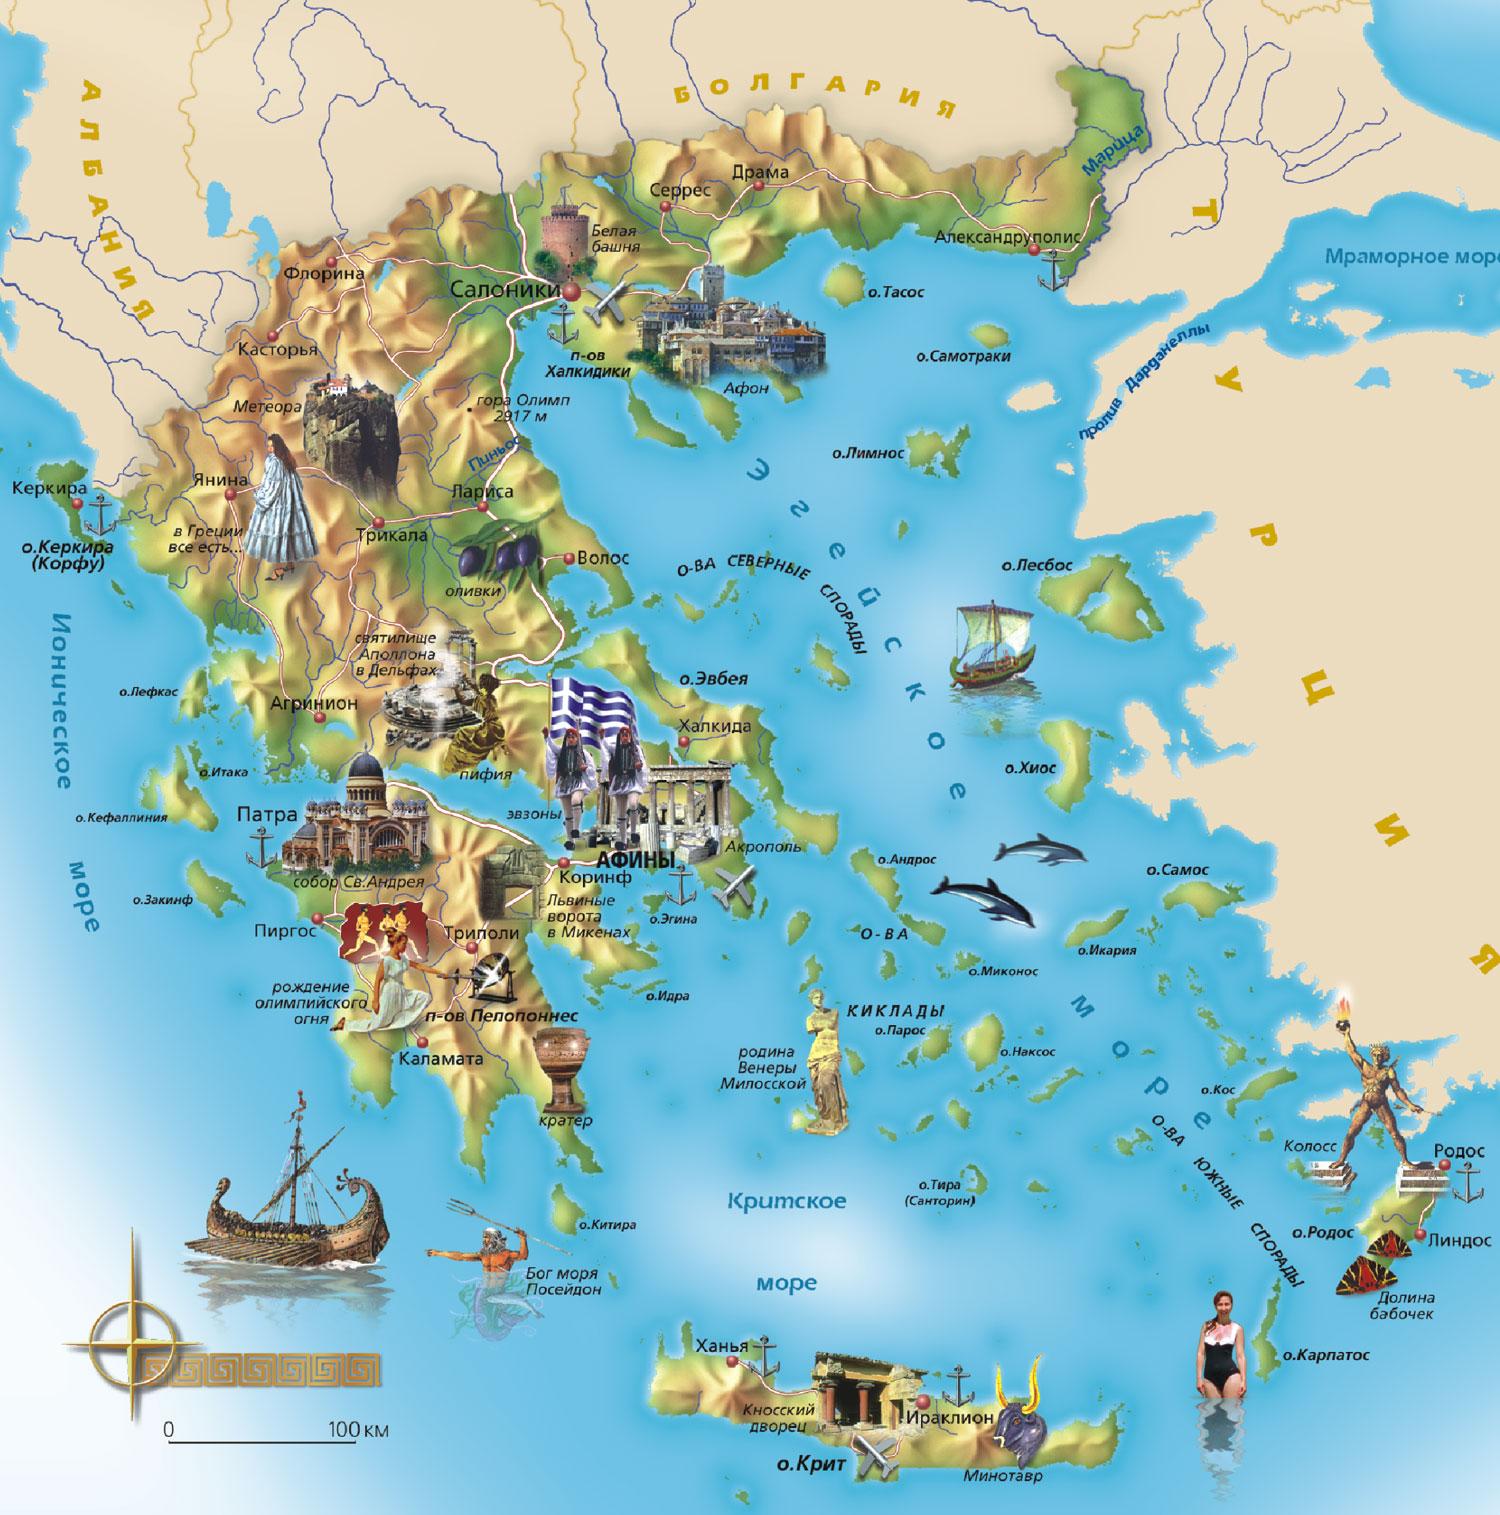 greek travel information